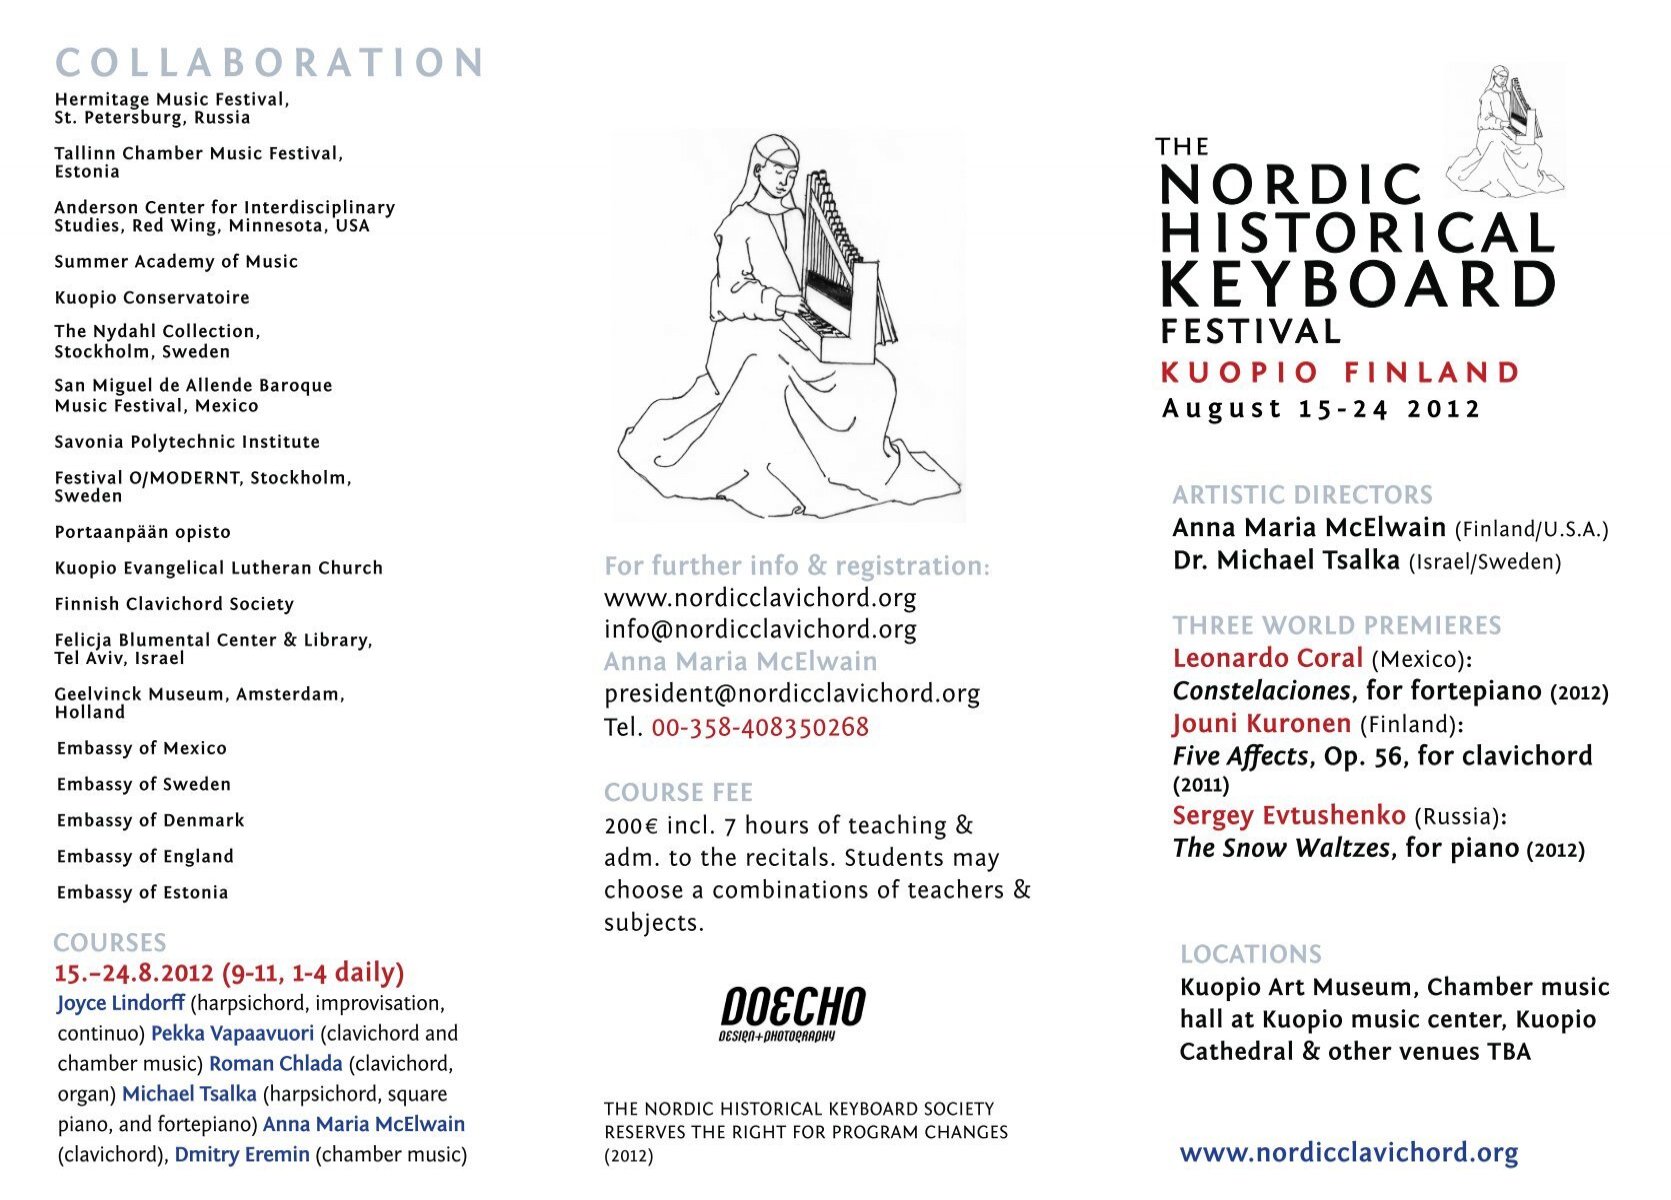 pdf version of program - Nordic Historical Keyboard Festival